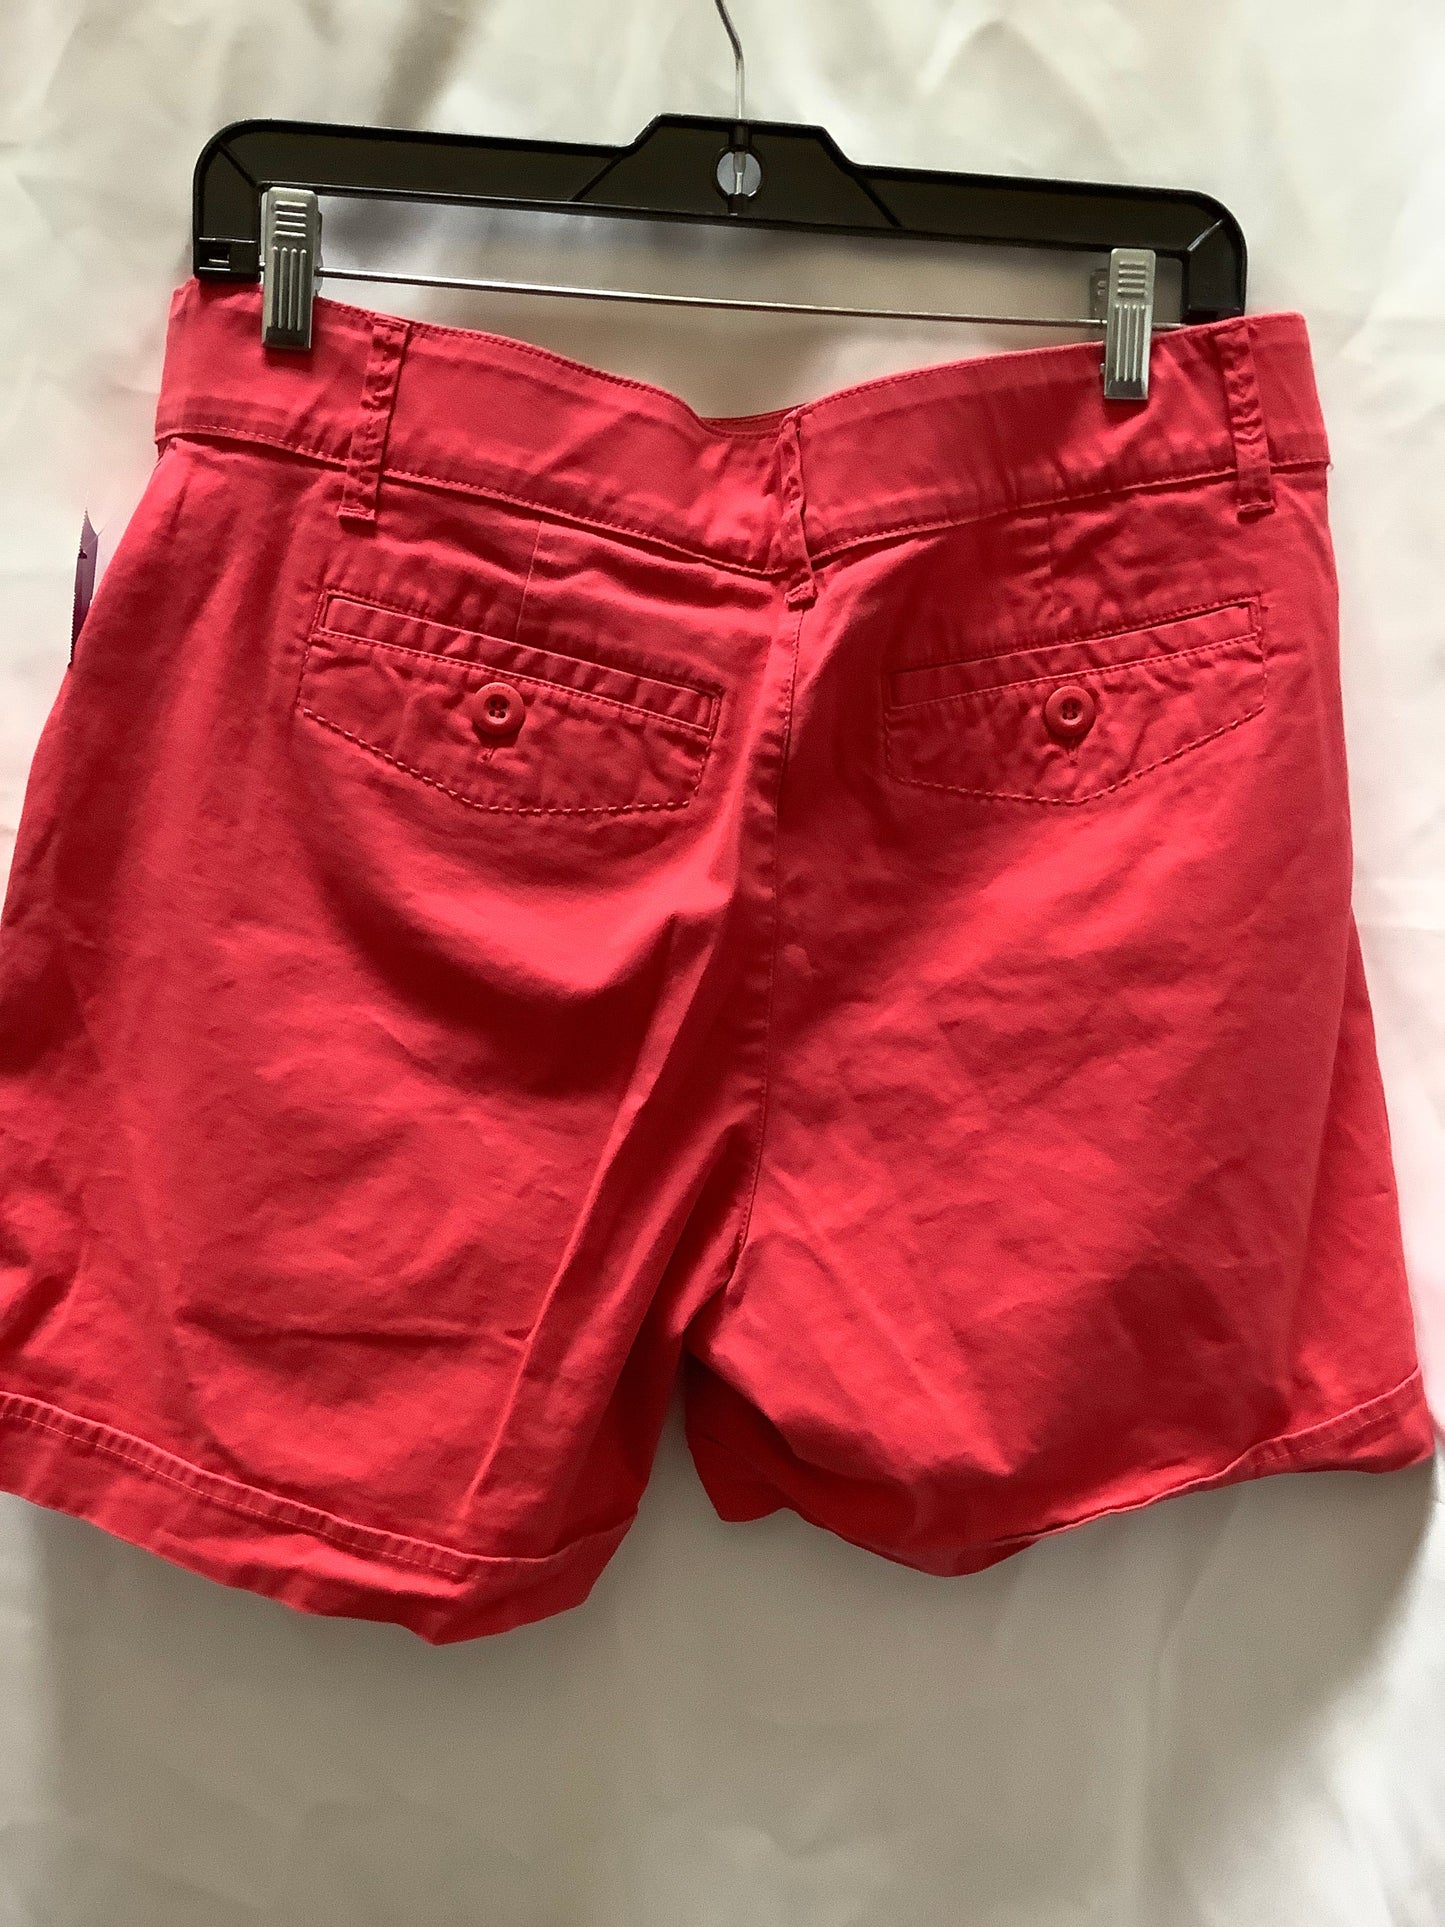 Shorts By Gloria Vanderbilt  Size: 12